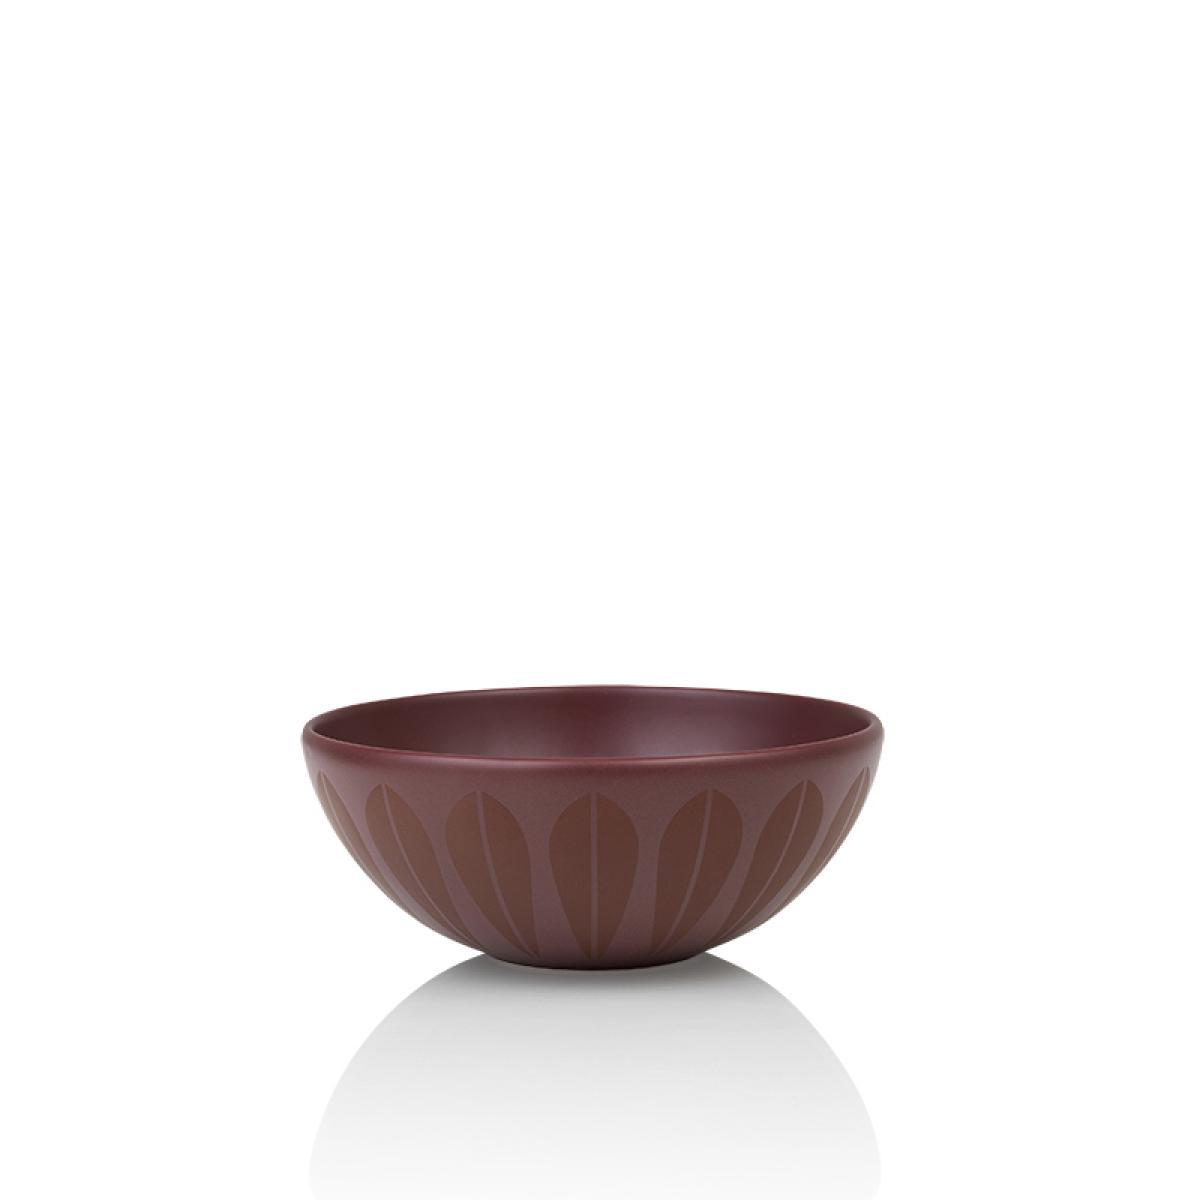 Lucie Kaas Arne Clausen Bowl rojo oscuro, 18 cm